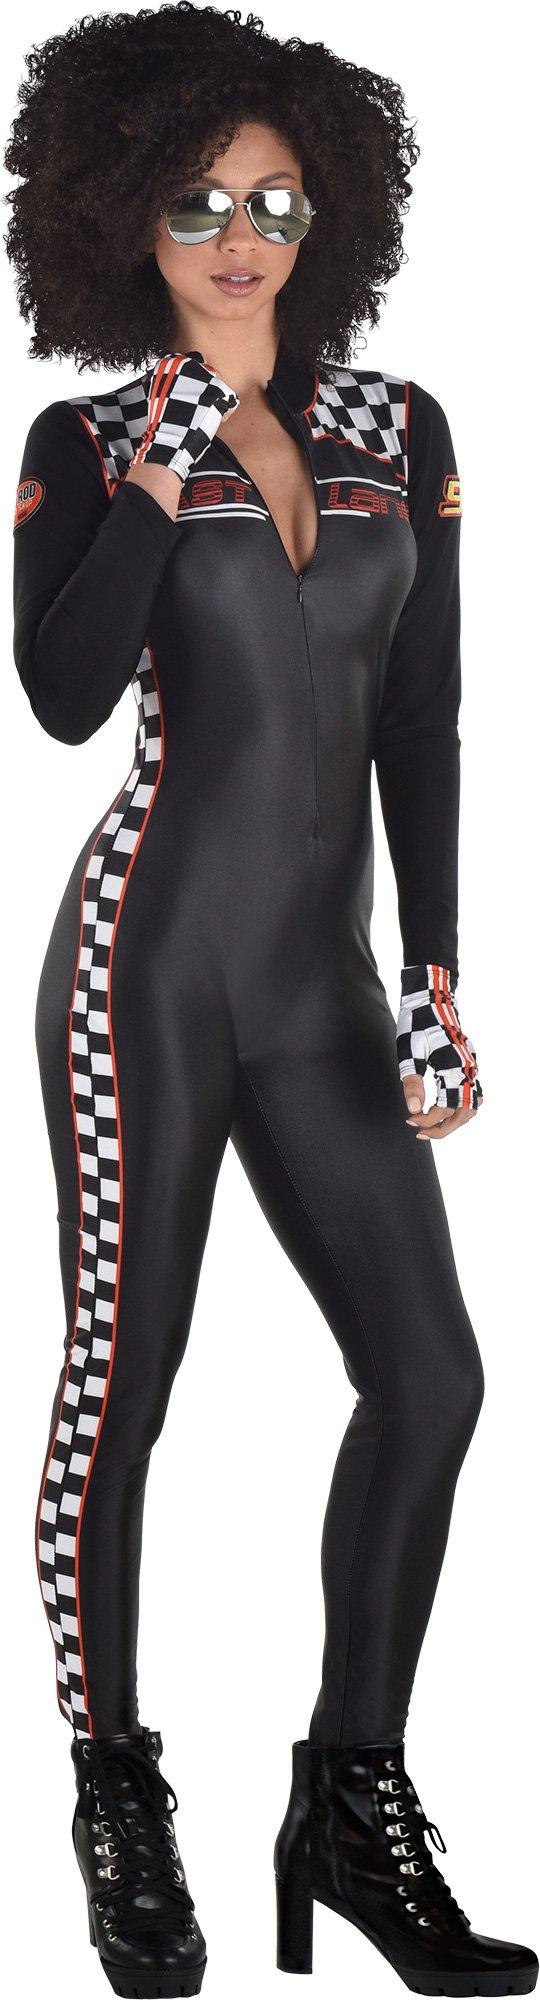 Racecar Driver Catsuit Costume